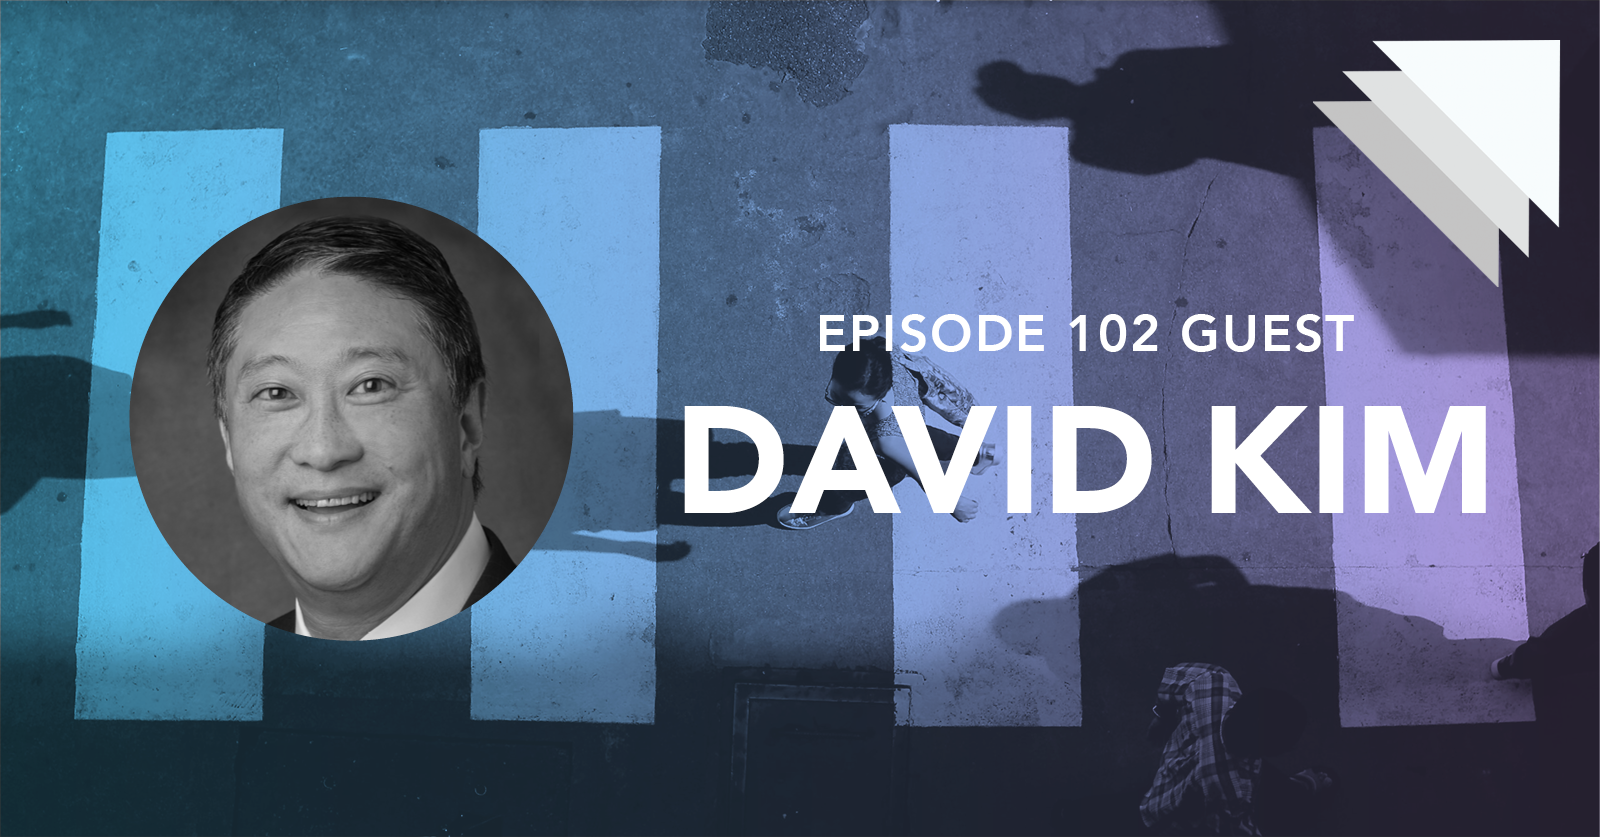 Episode 102 guest David Kim